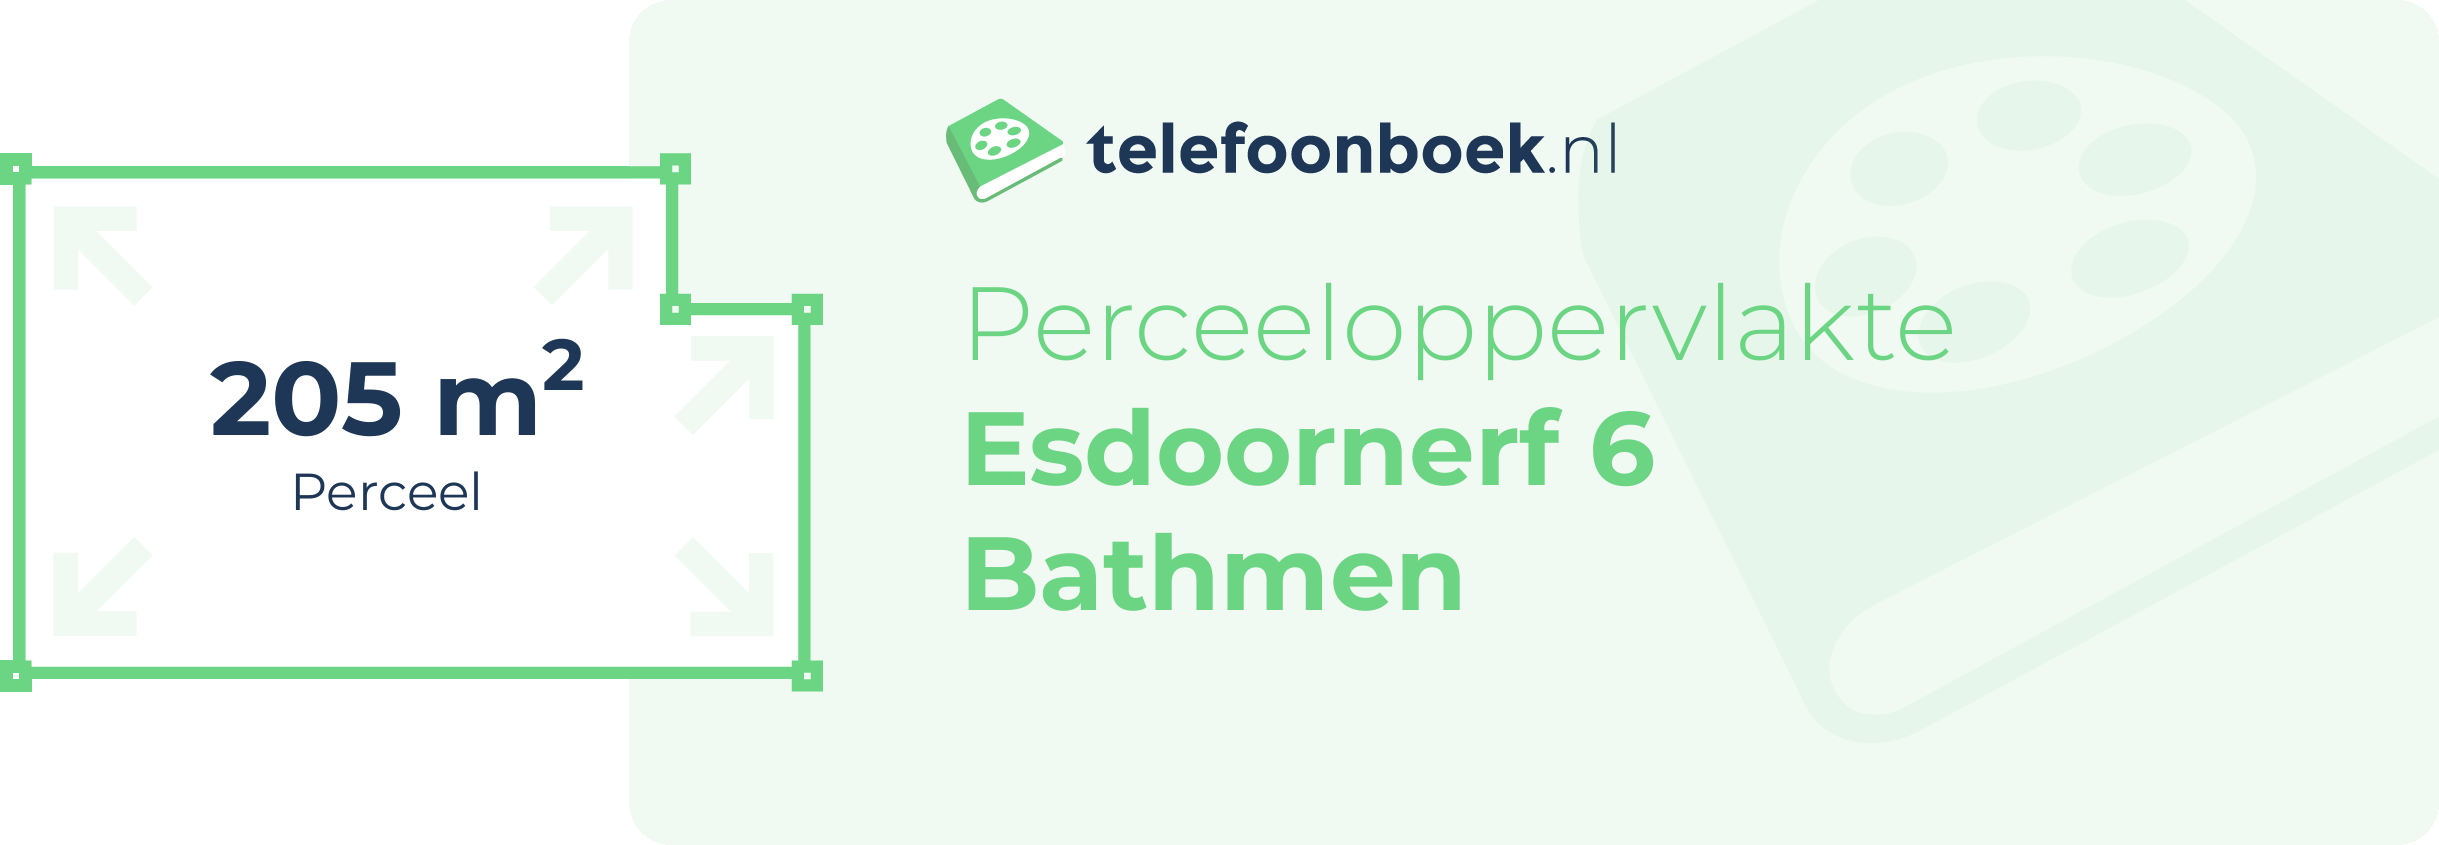 Perceeloppervlakte Esdoornerf 6 Bathmen